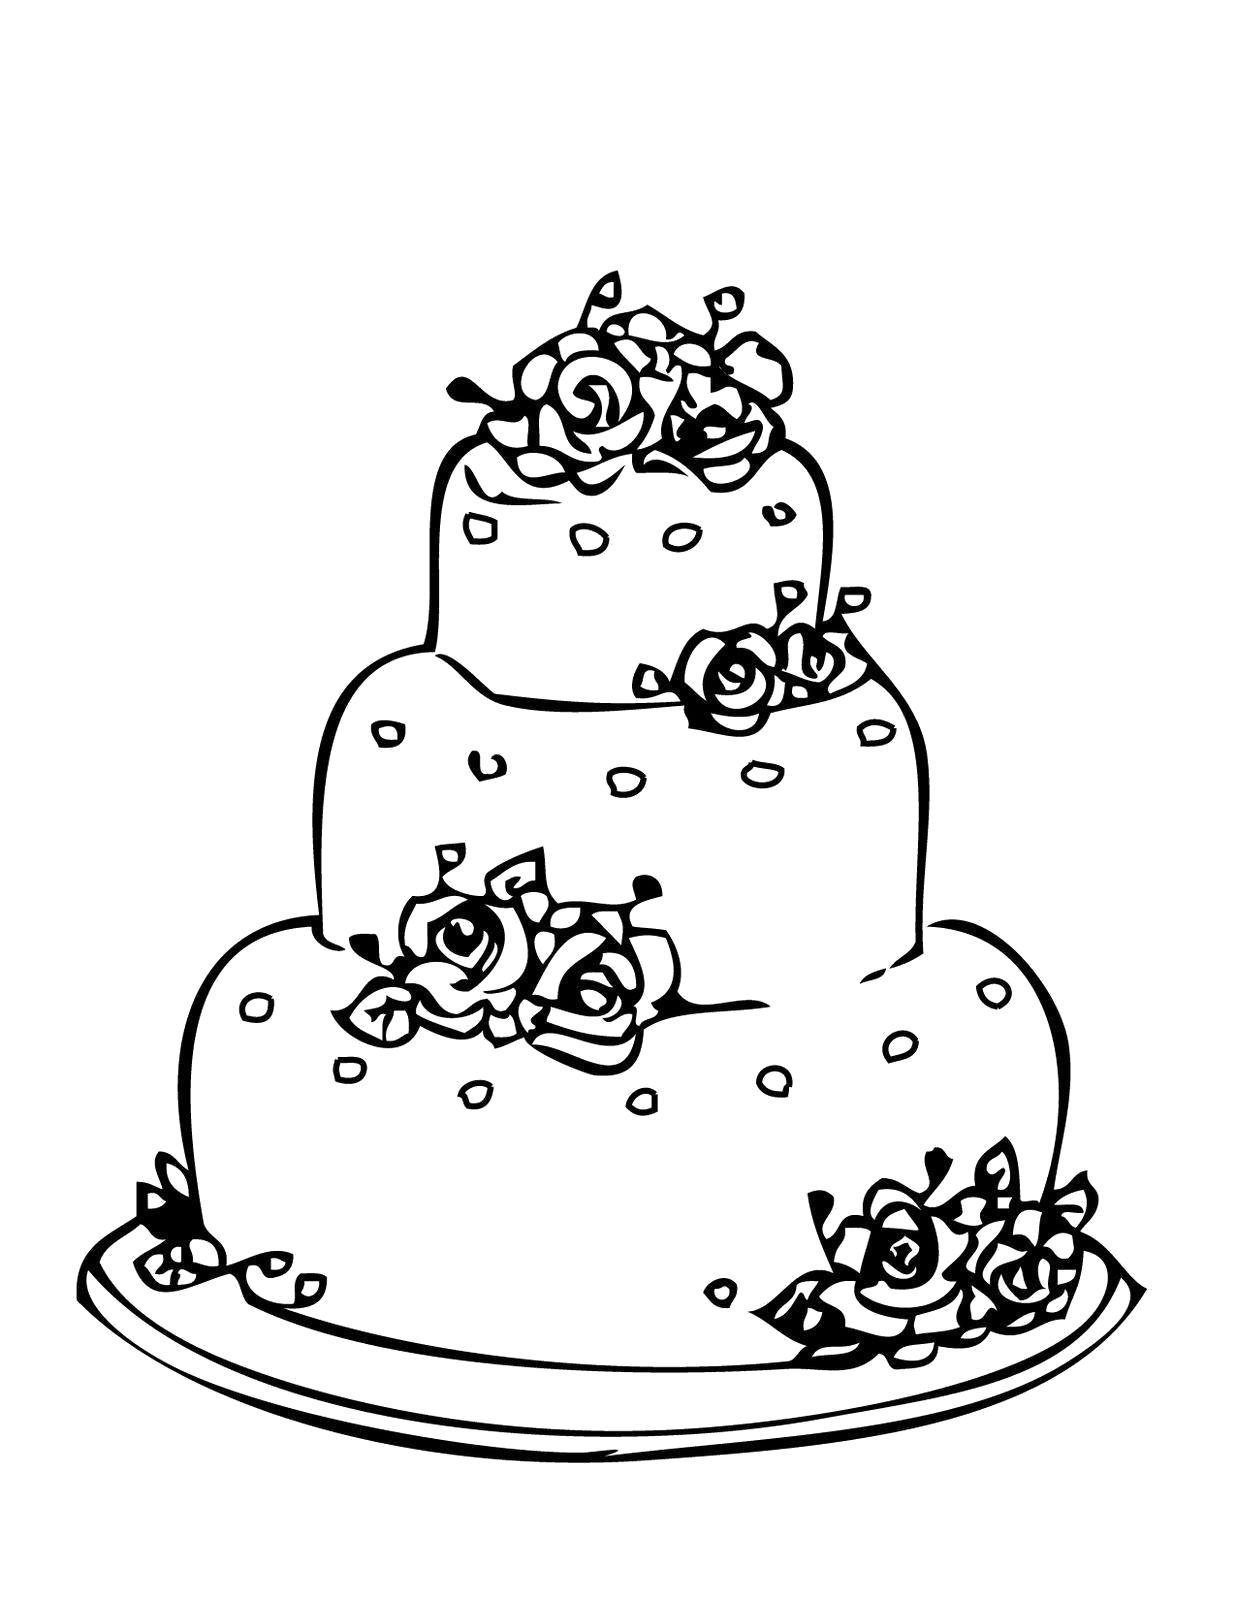 Название: Раскраска Раскраски "торт со свечами на день рождения" . Категория: еда. Теги: торт.